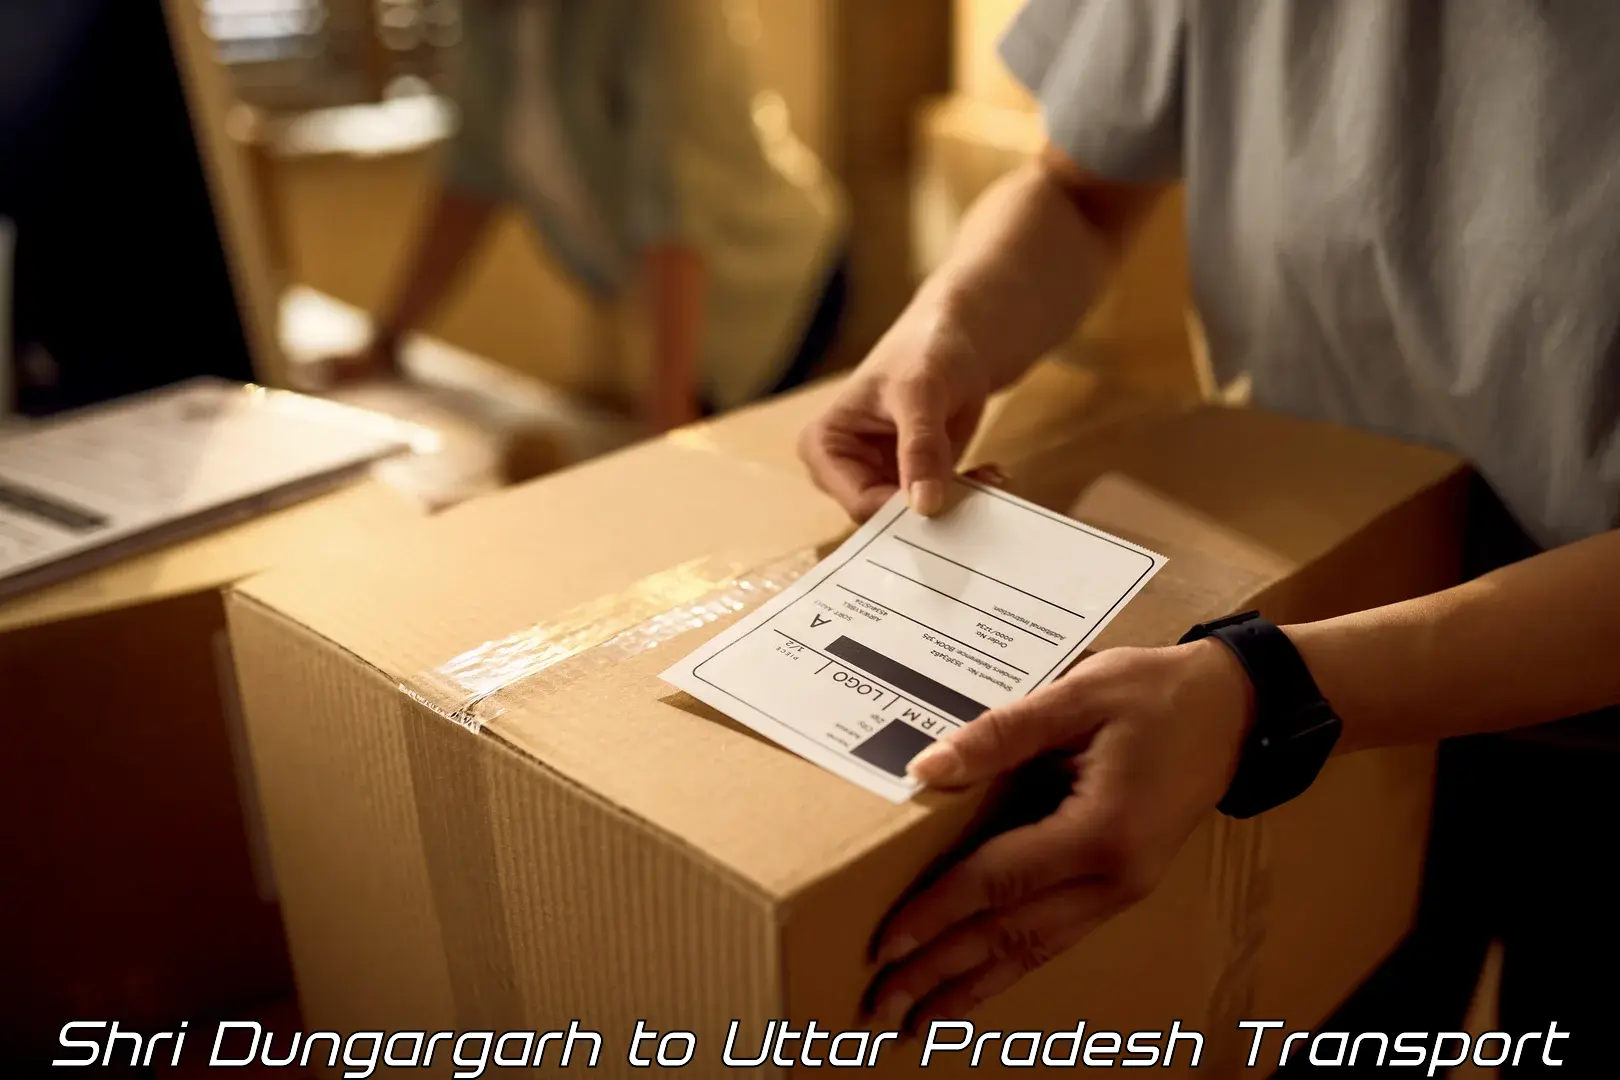 Shipping partner Shri Dungargarh to Sant Kabir Nagar